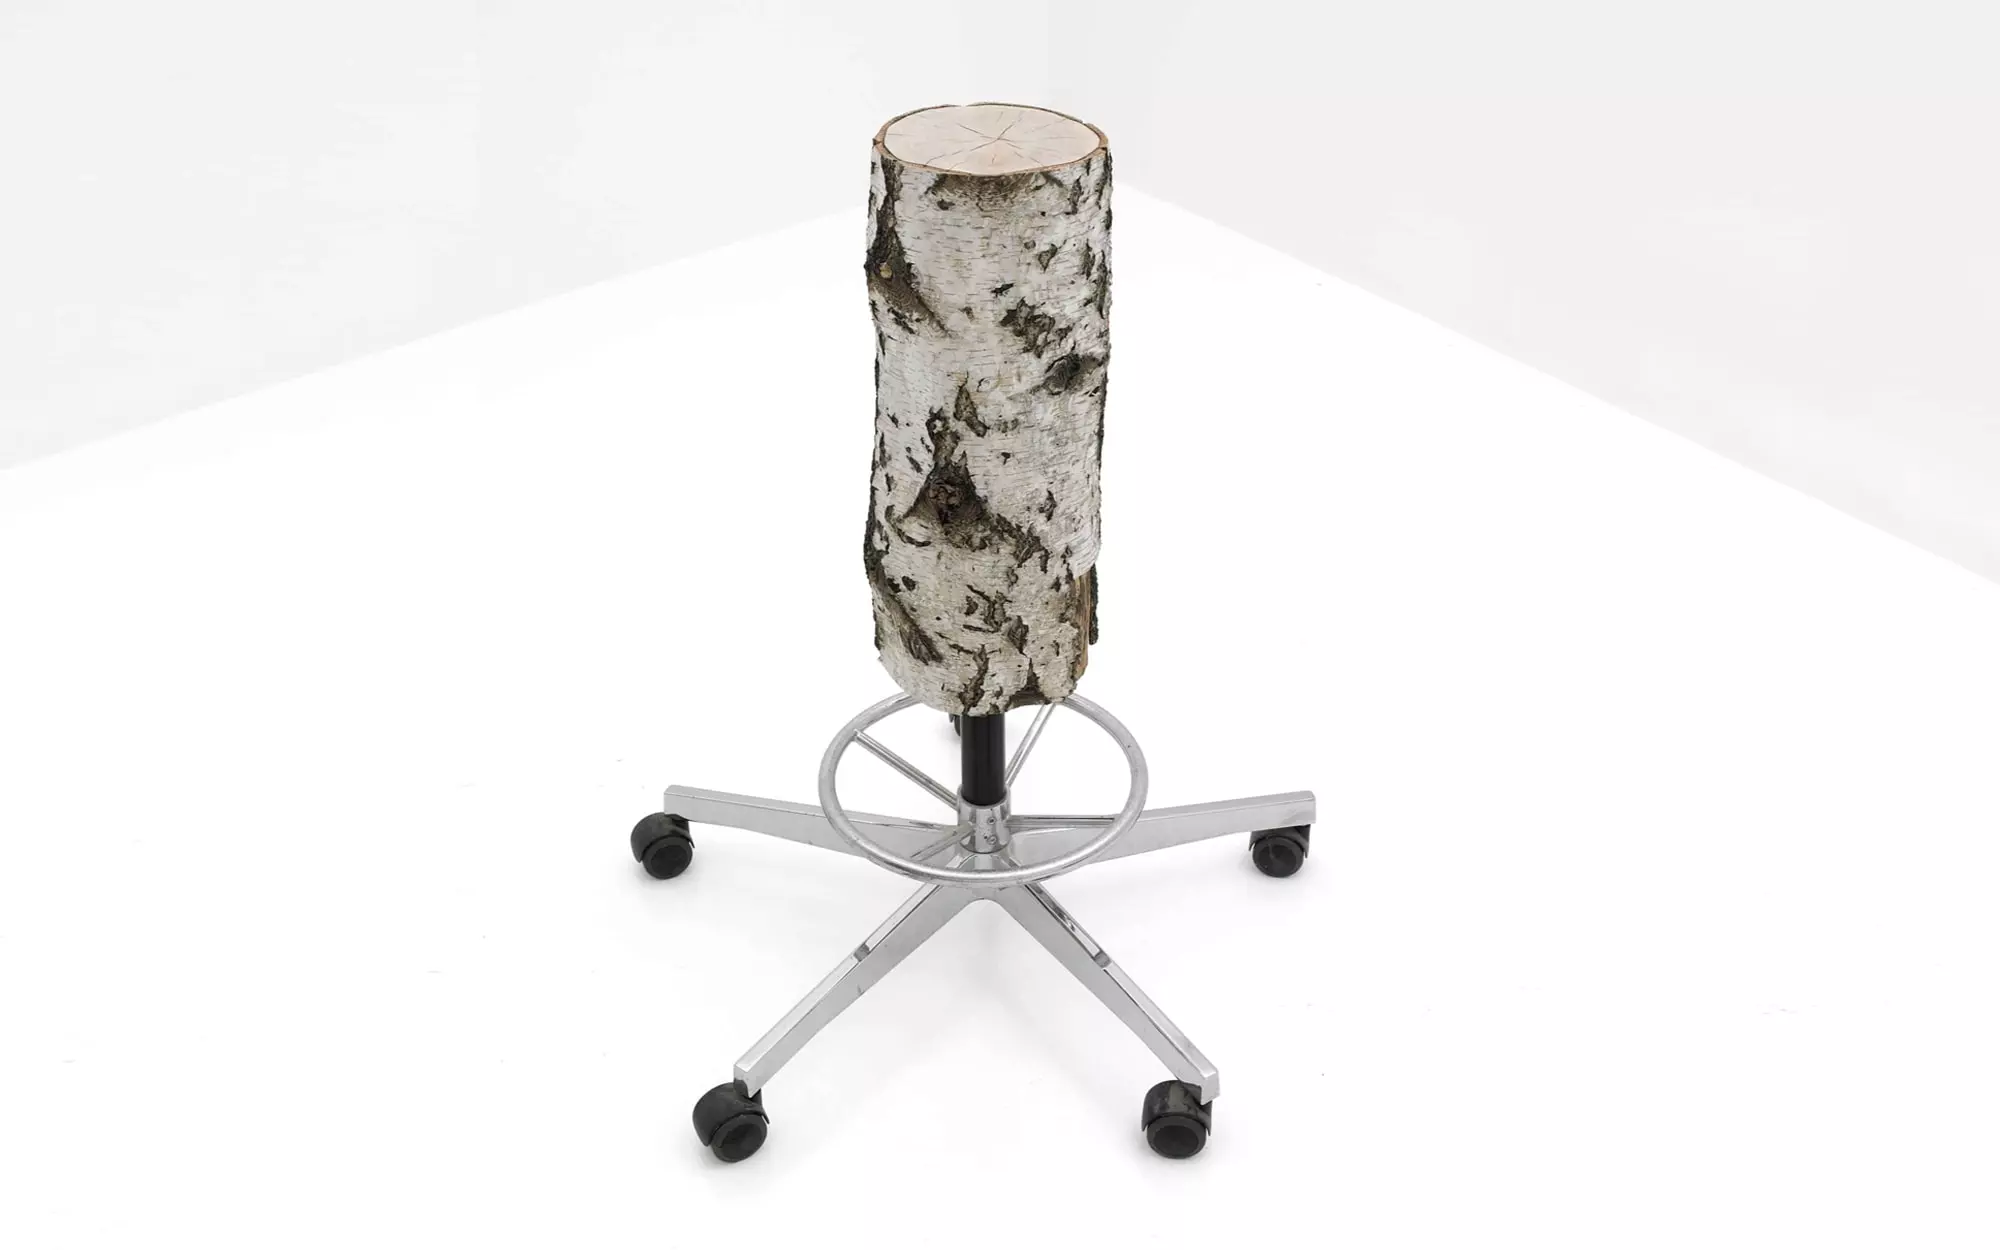 Stool - Andrea Branzi - stool - Galerie kreo